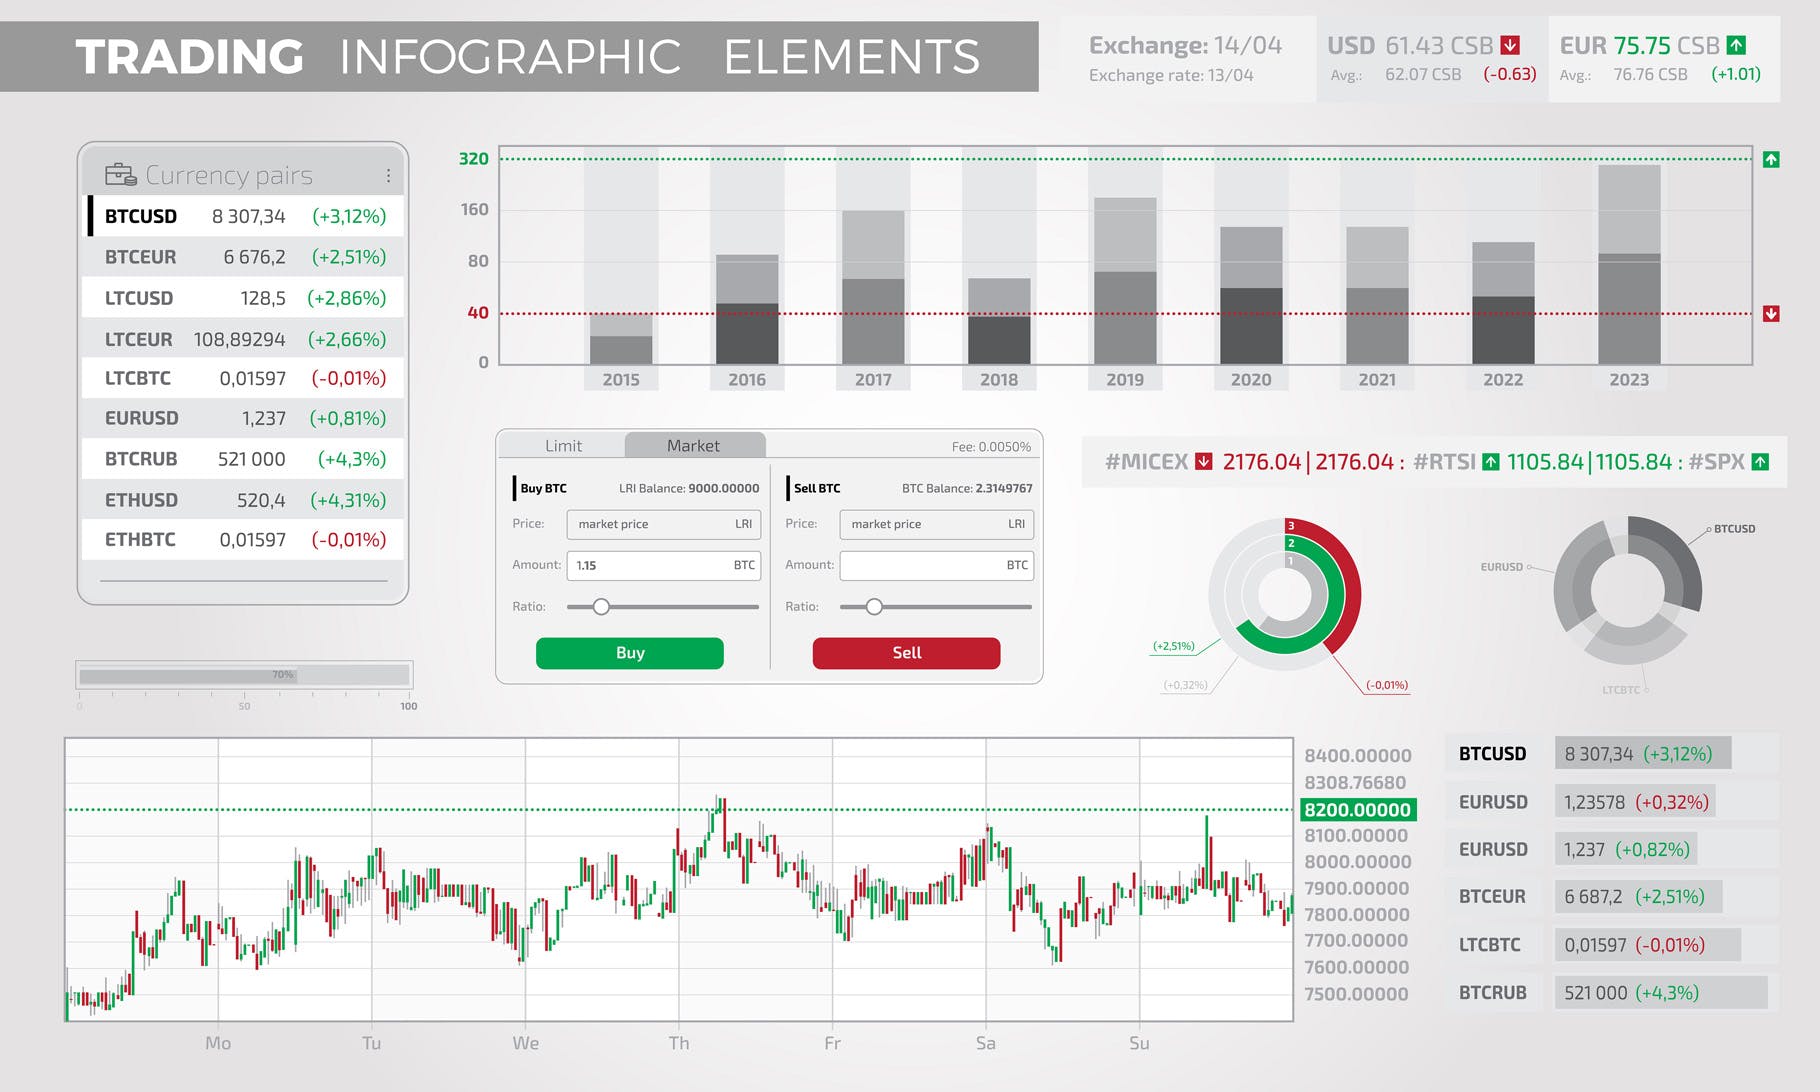 股票交易行情可视化数据图表设计模板 Trading Infographic Elements插图(4)